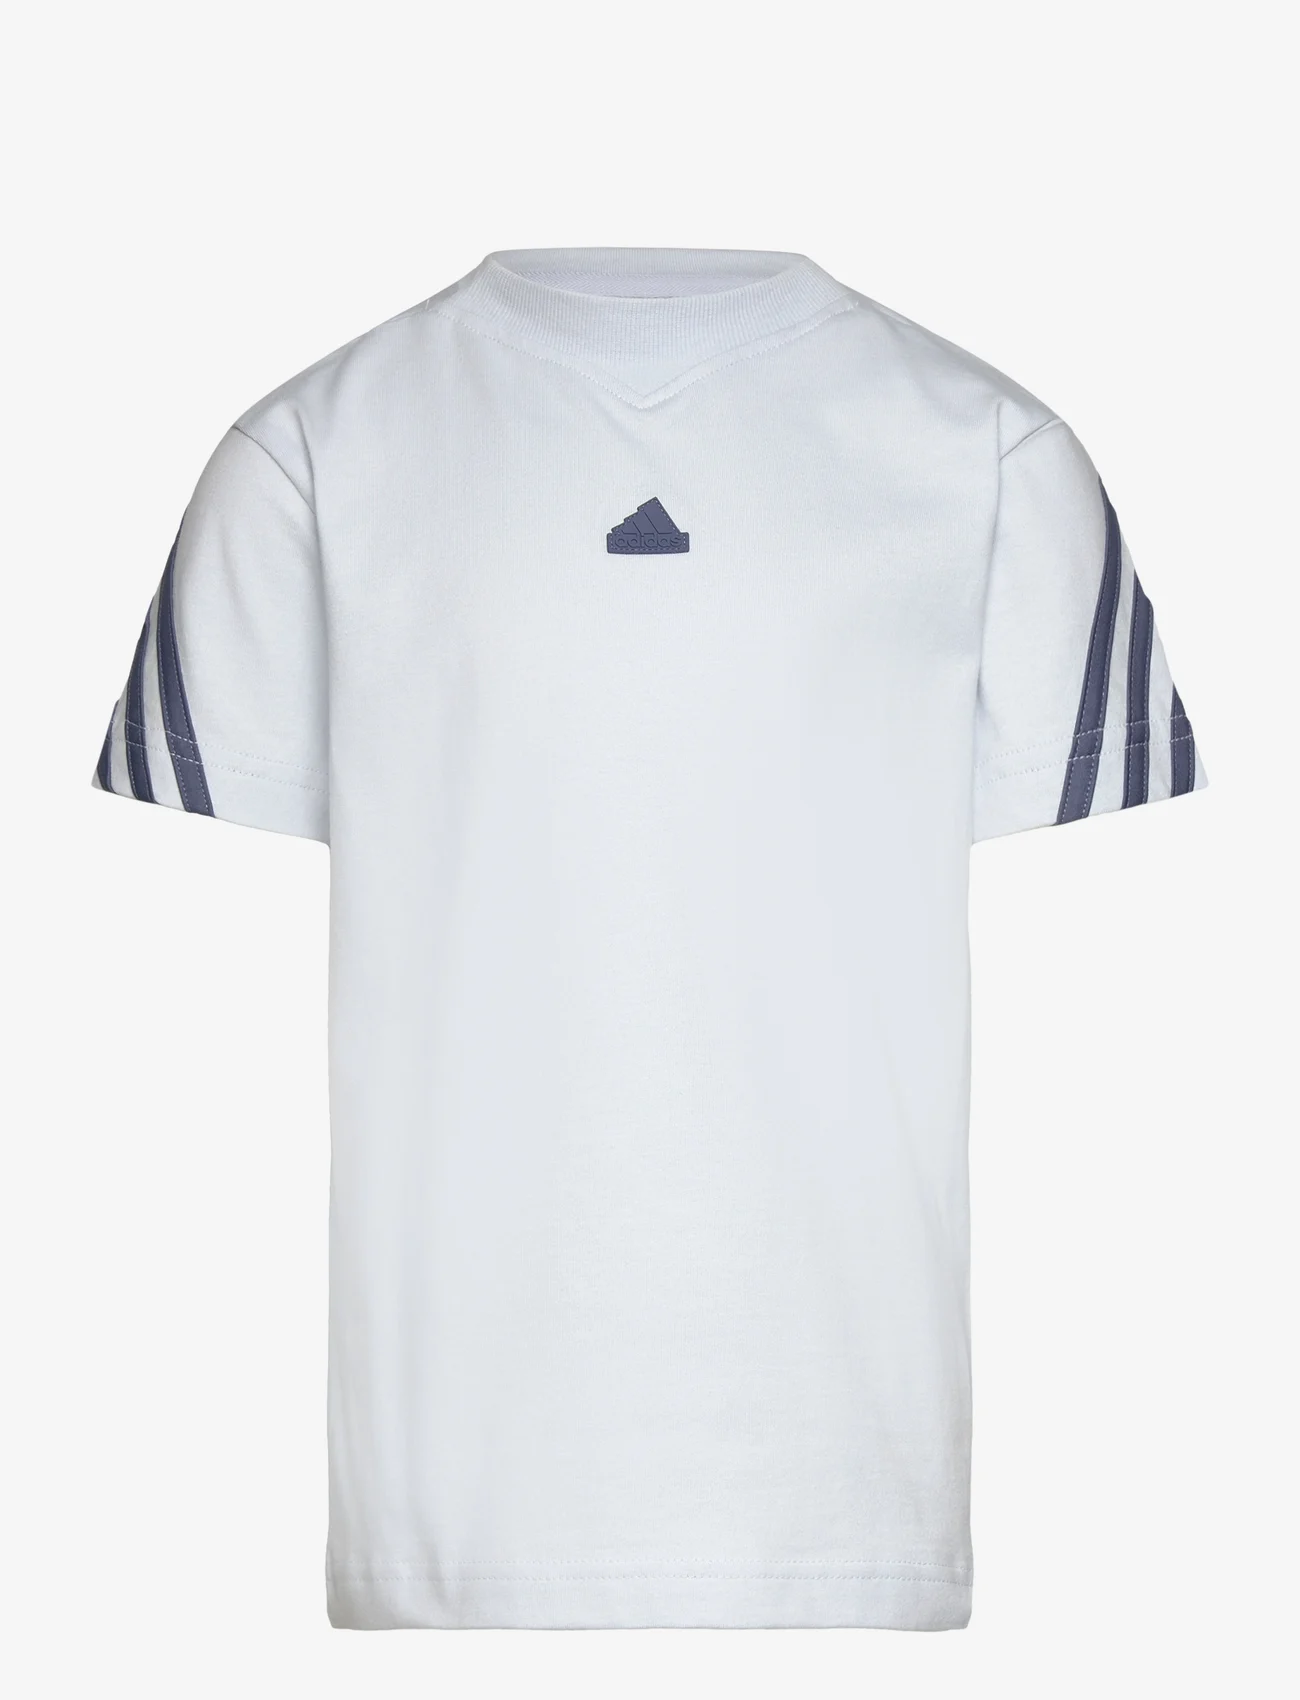 adidas Performance - Future Icons 3-Stripes T-Shirt - kurzärmelig - halblu/prloin - 0